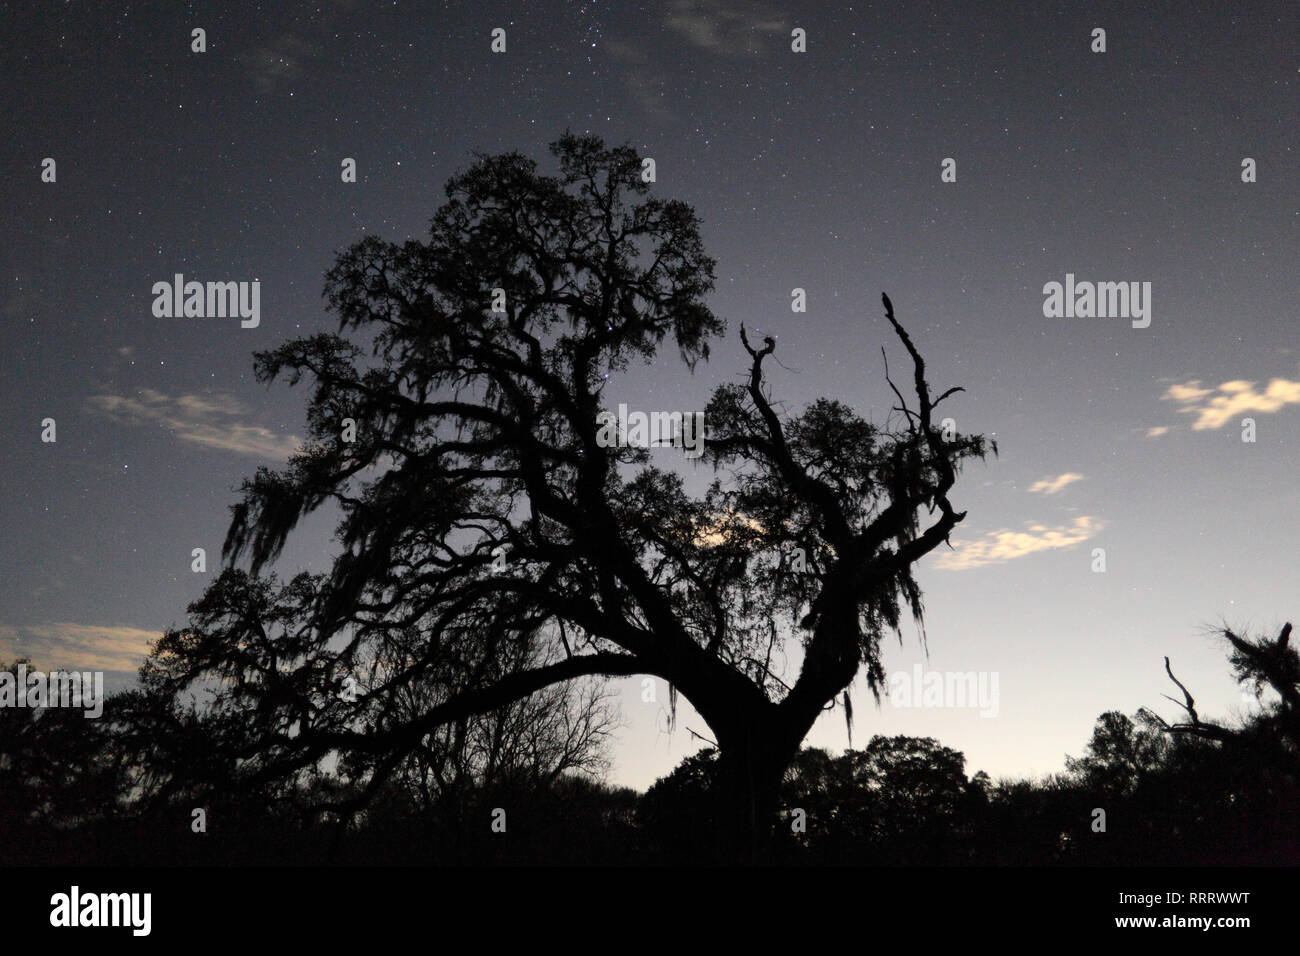 Night sky with trees Stock Photo